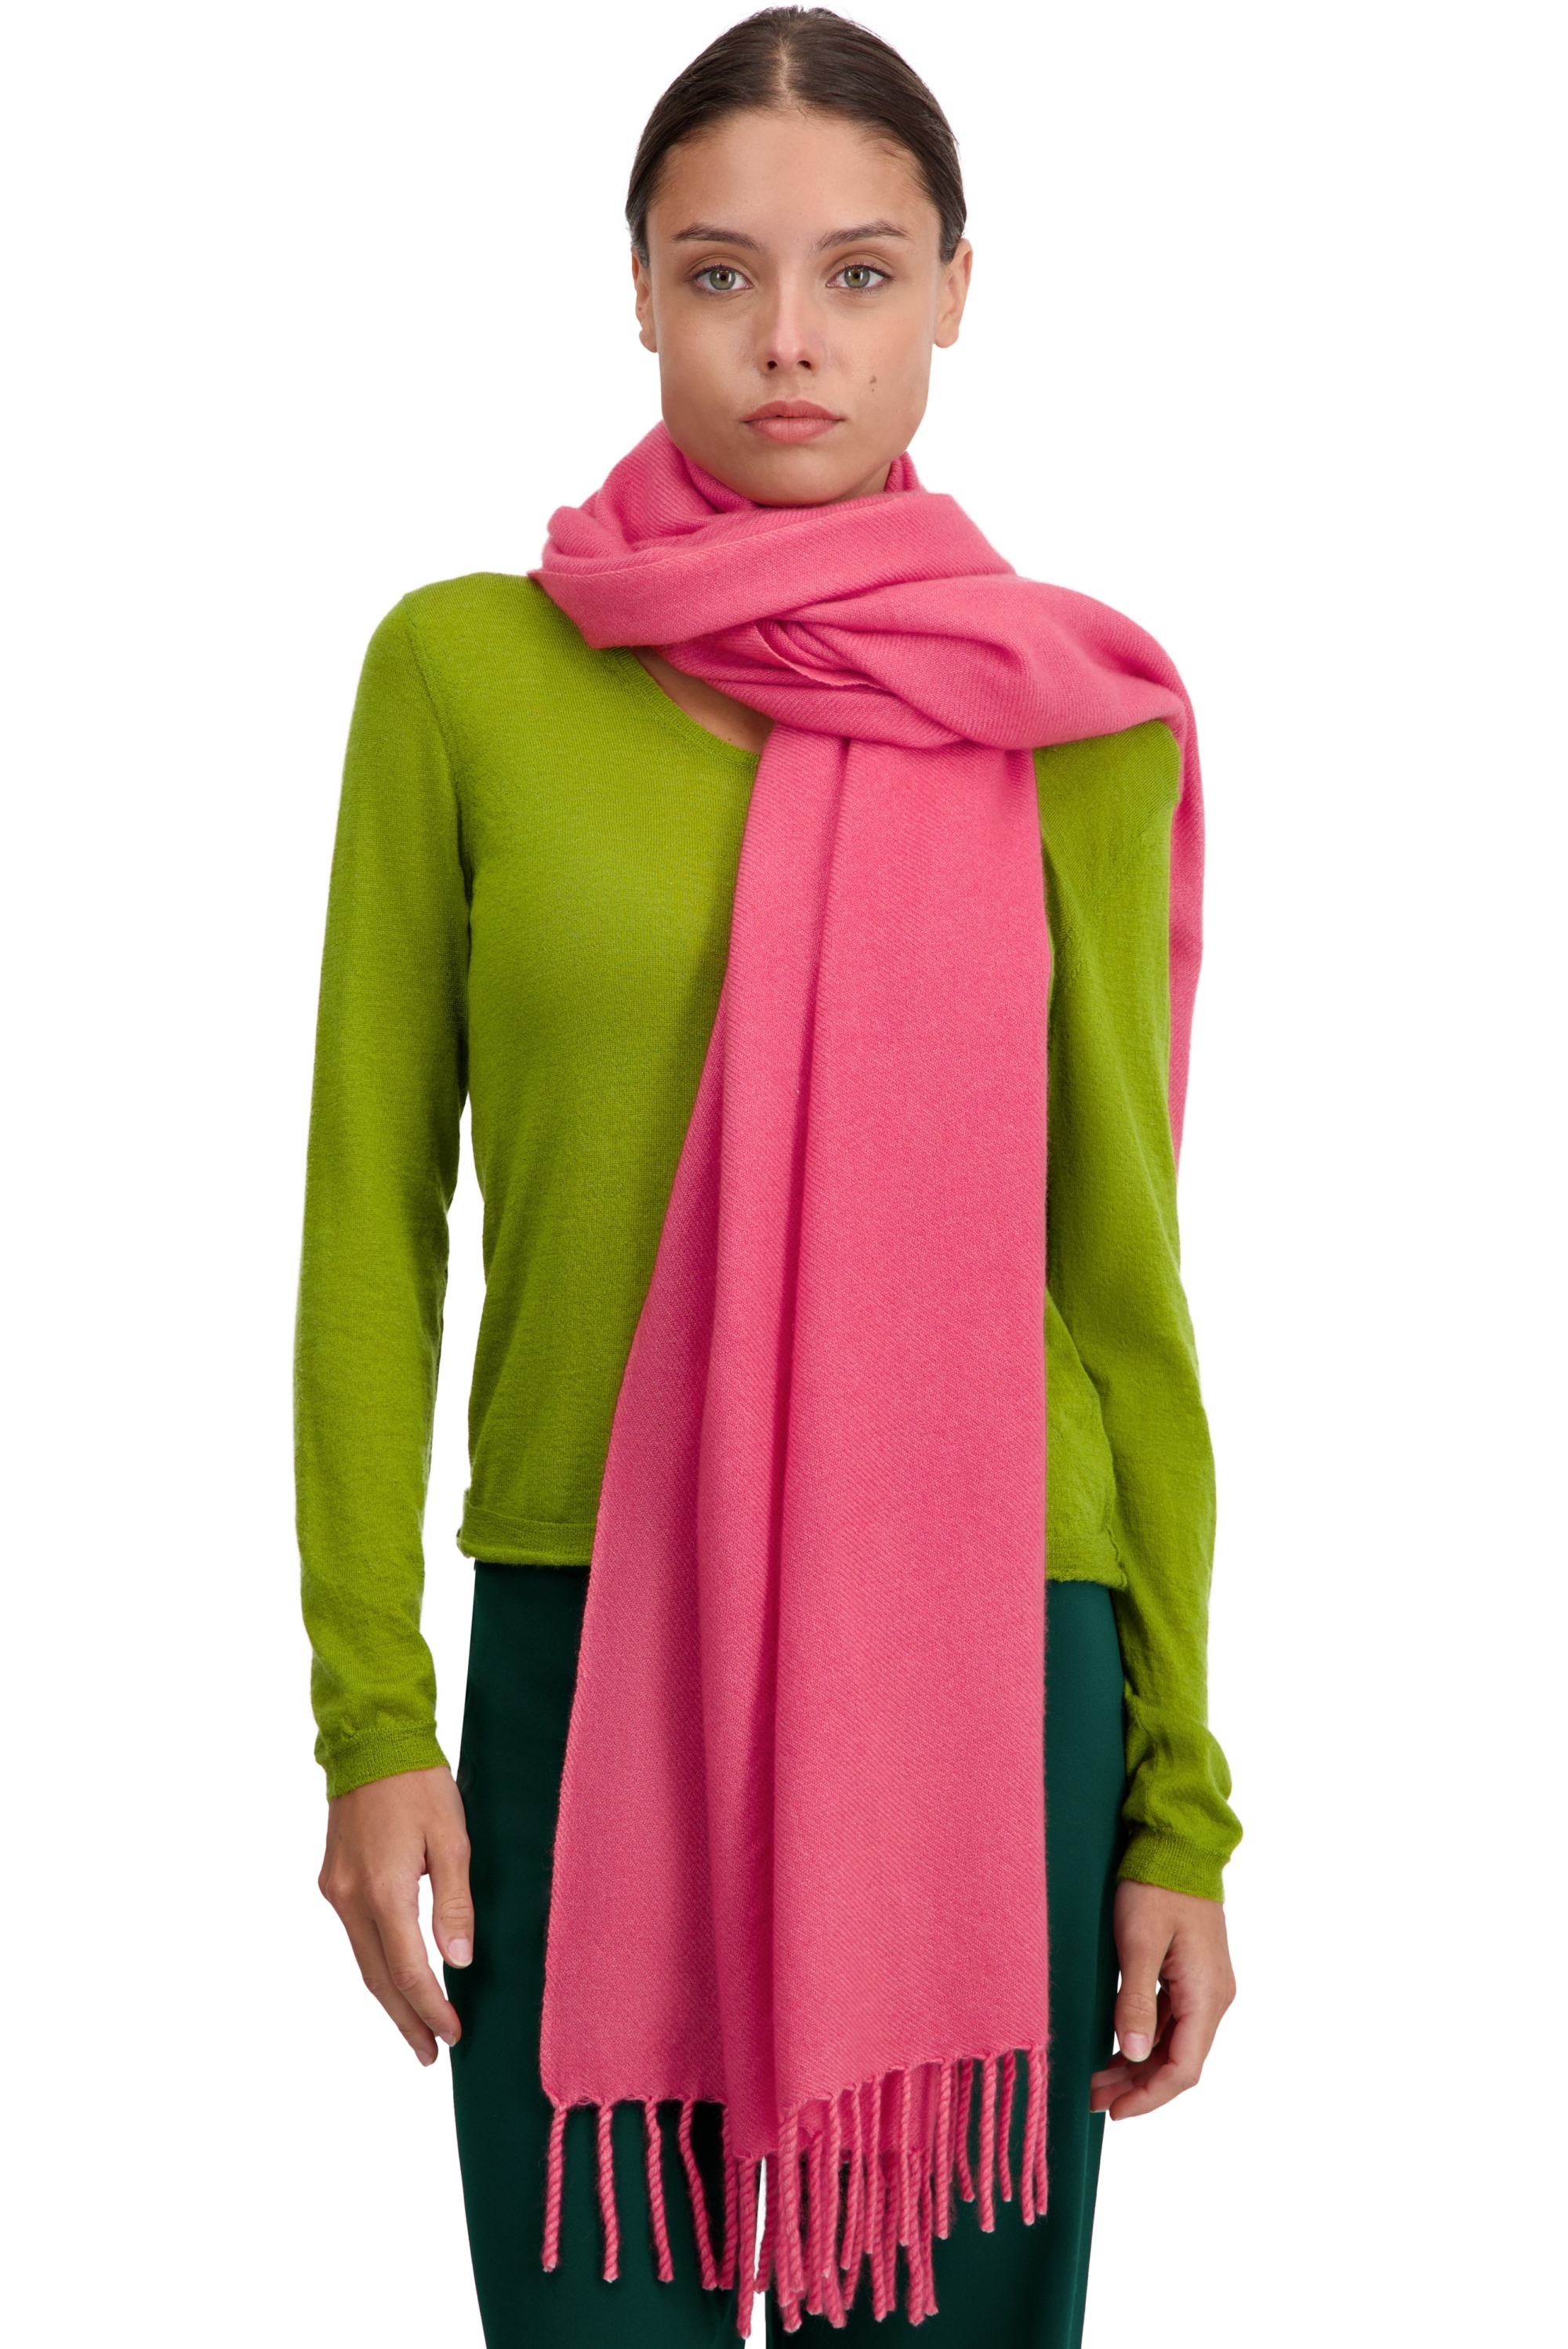 Cashmere ladies shawls niry sorbet 200x90cm